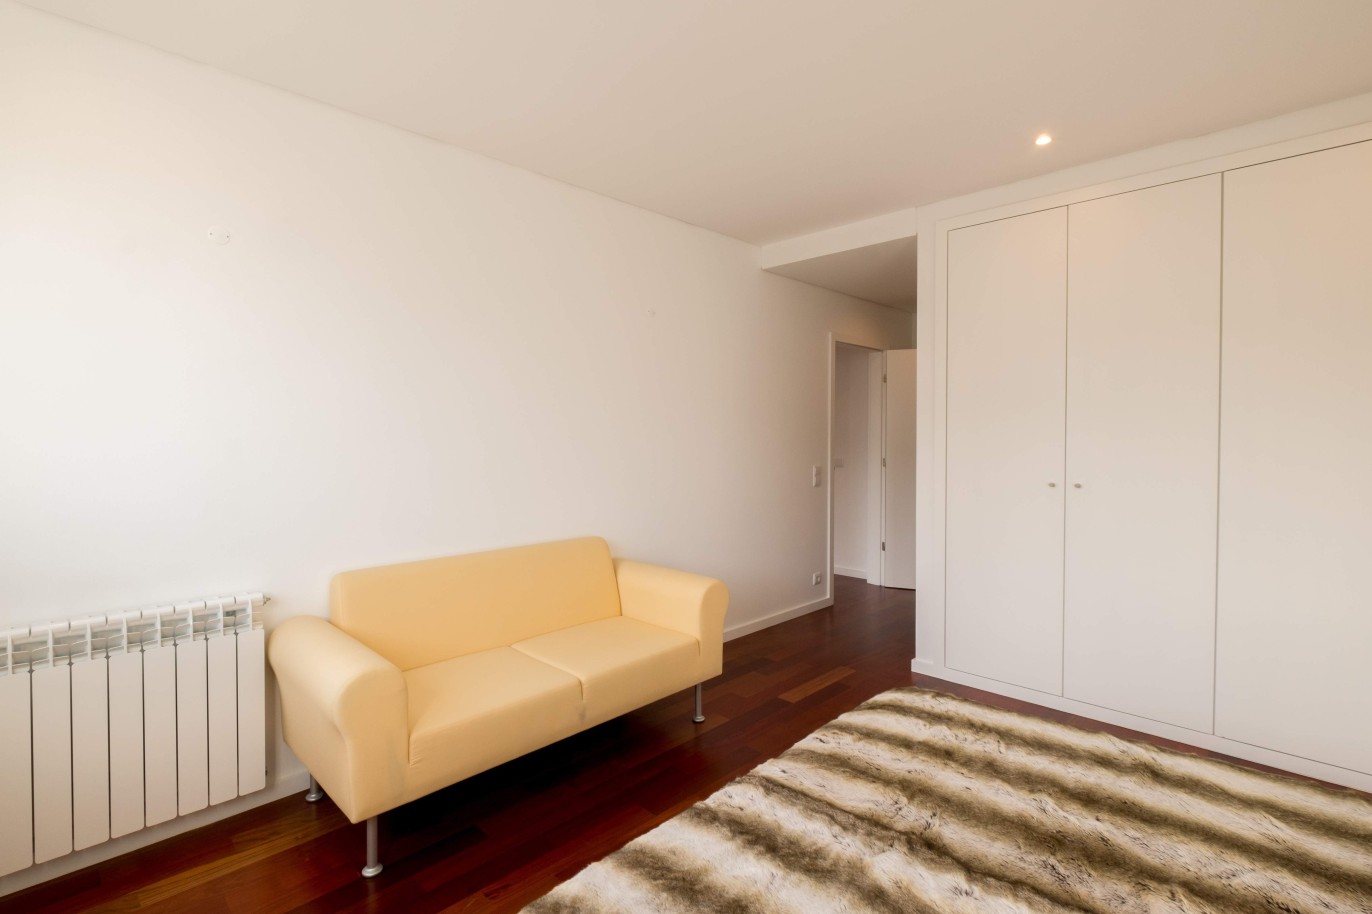 Apartamento T3 para venda, no Porto, junto à Boavista, Portugal_259269